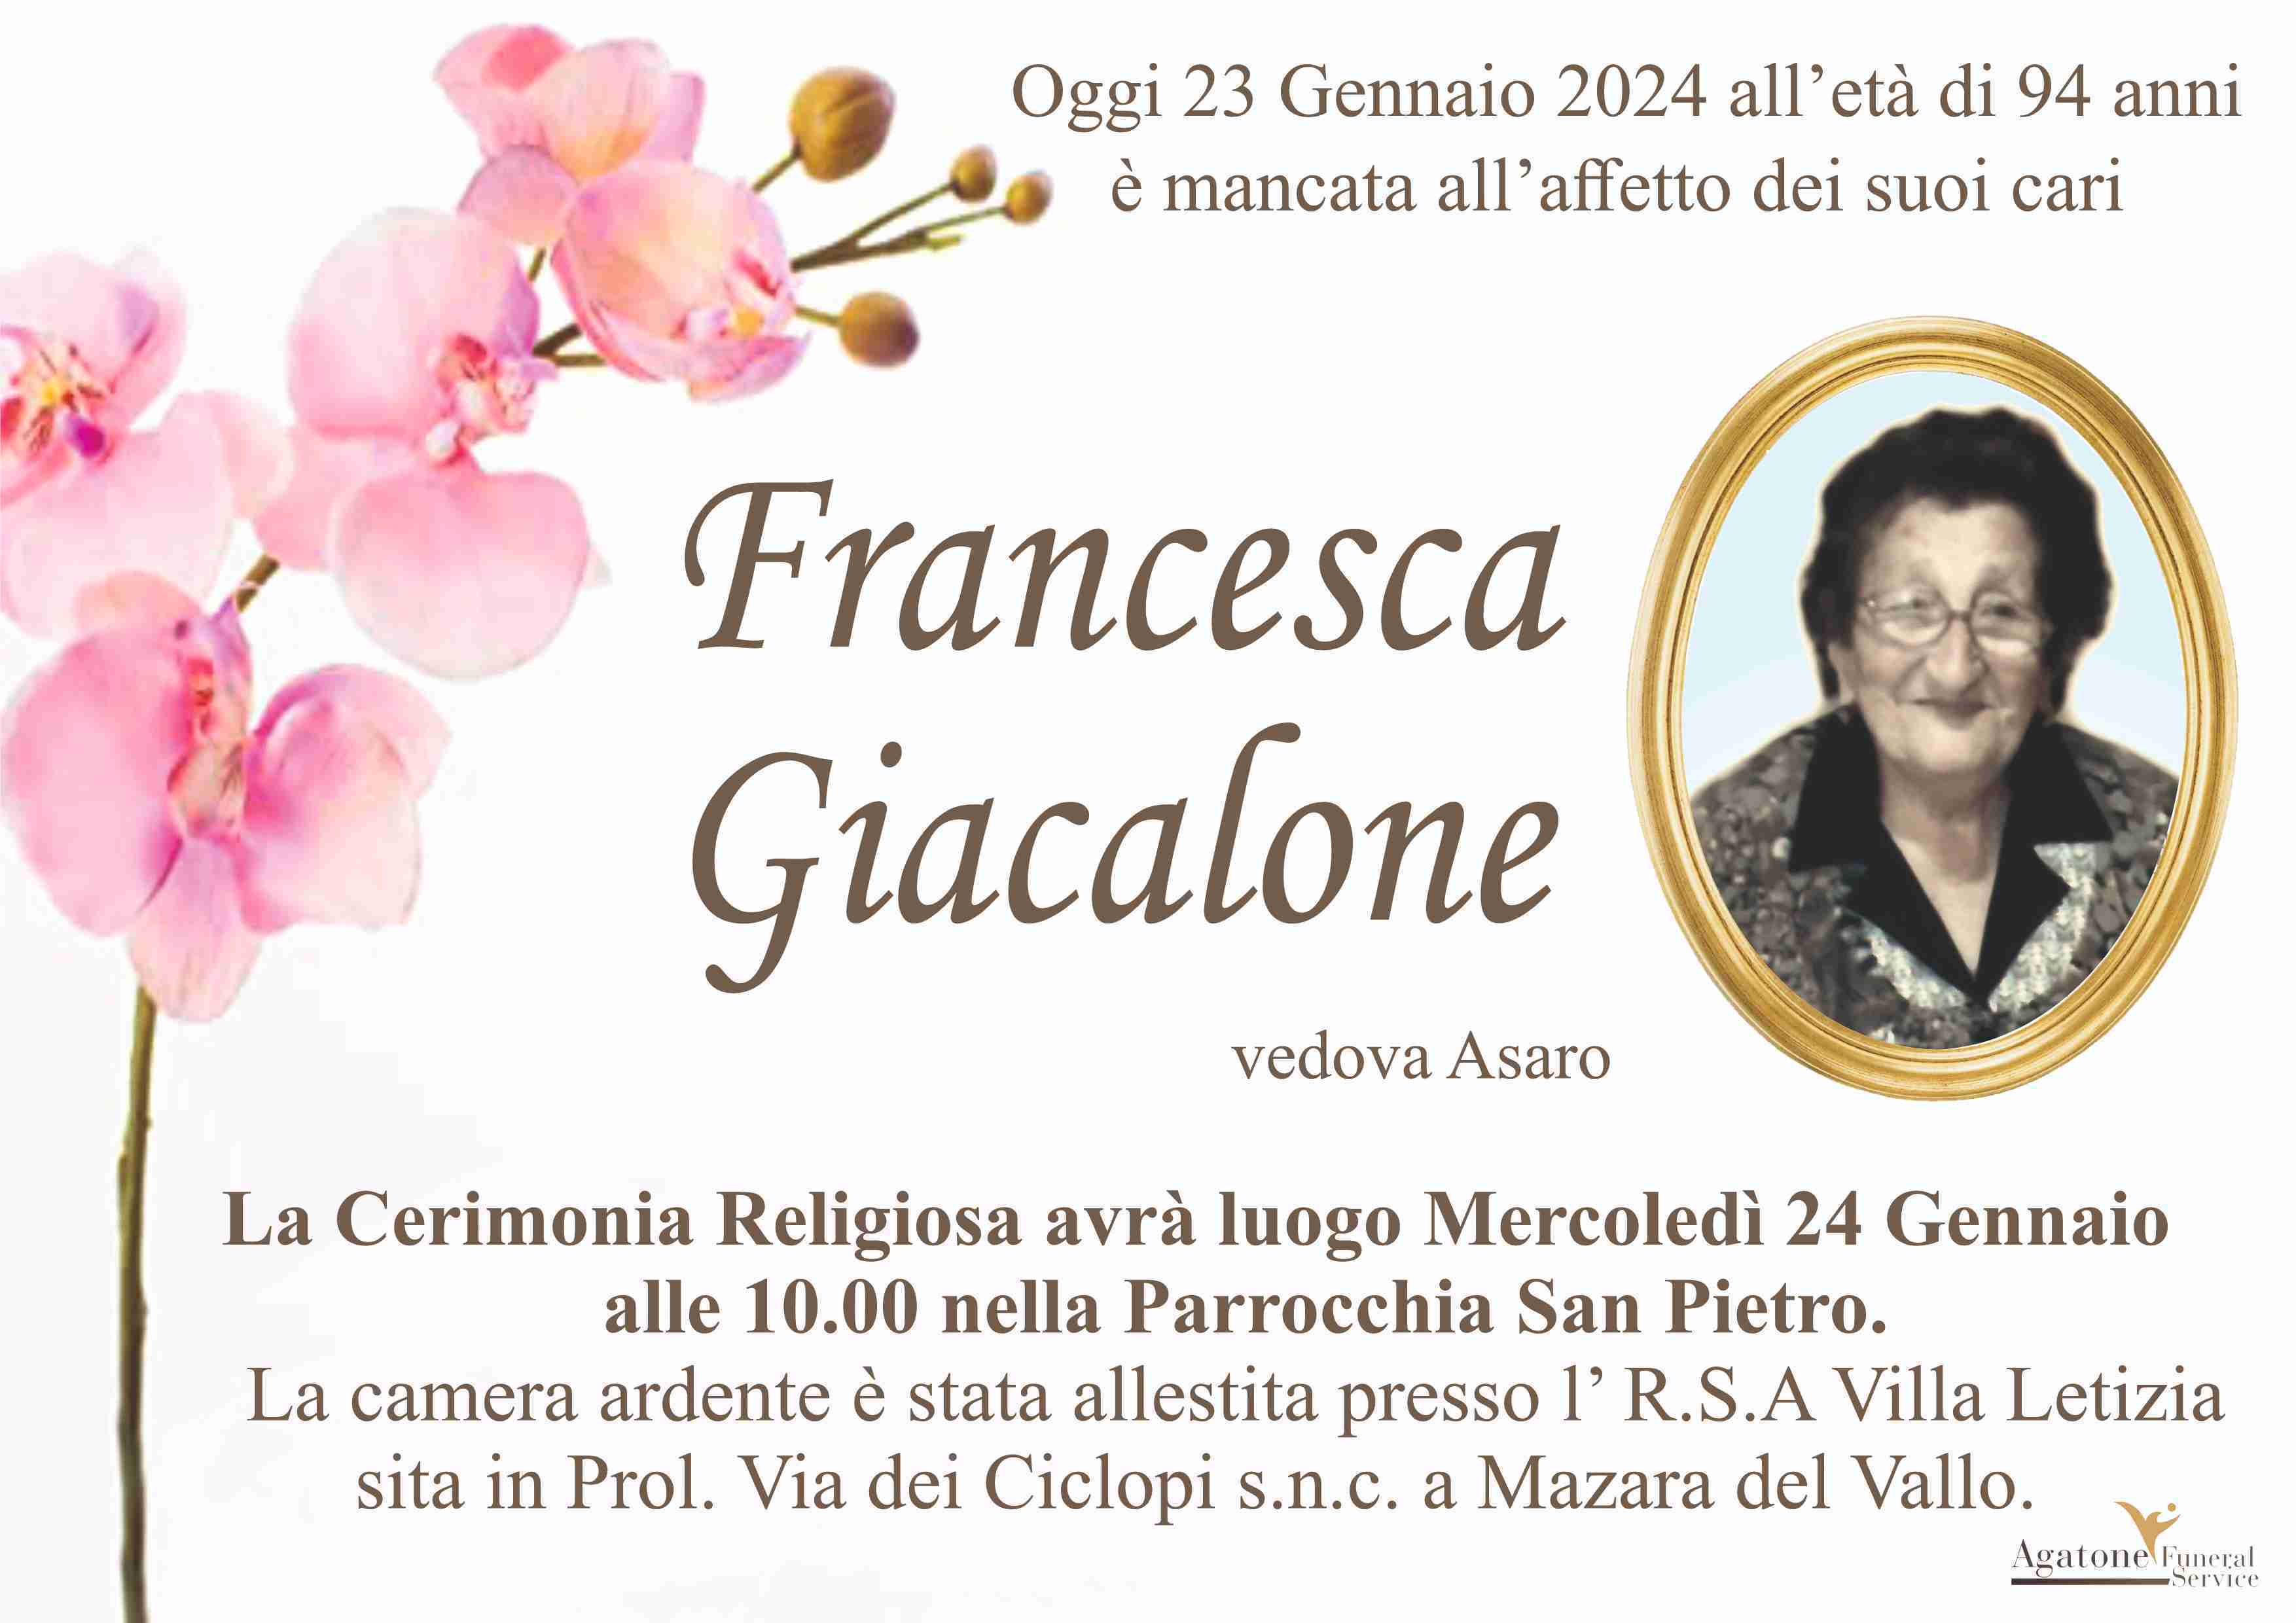 Francesca Giacalone